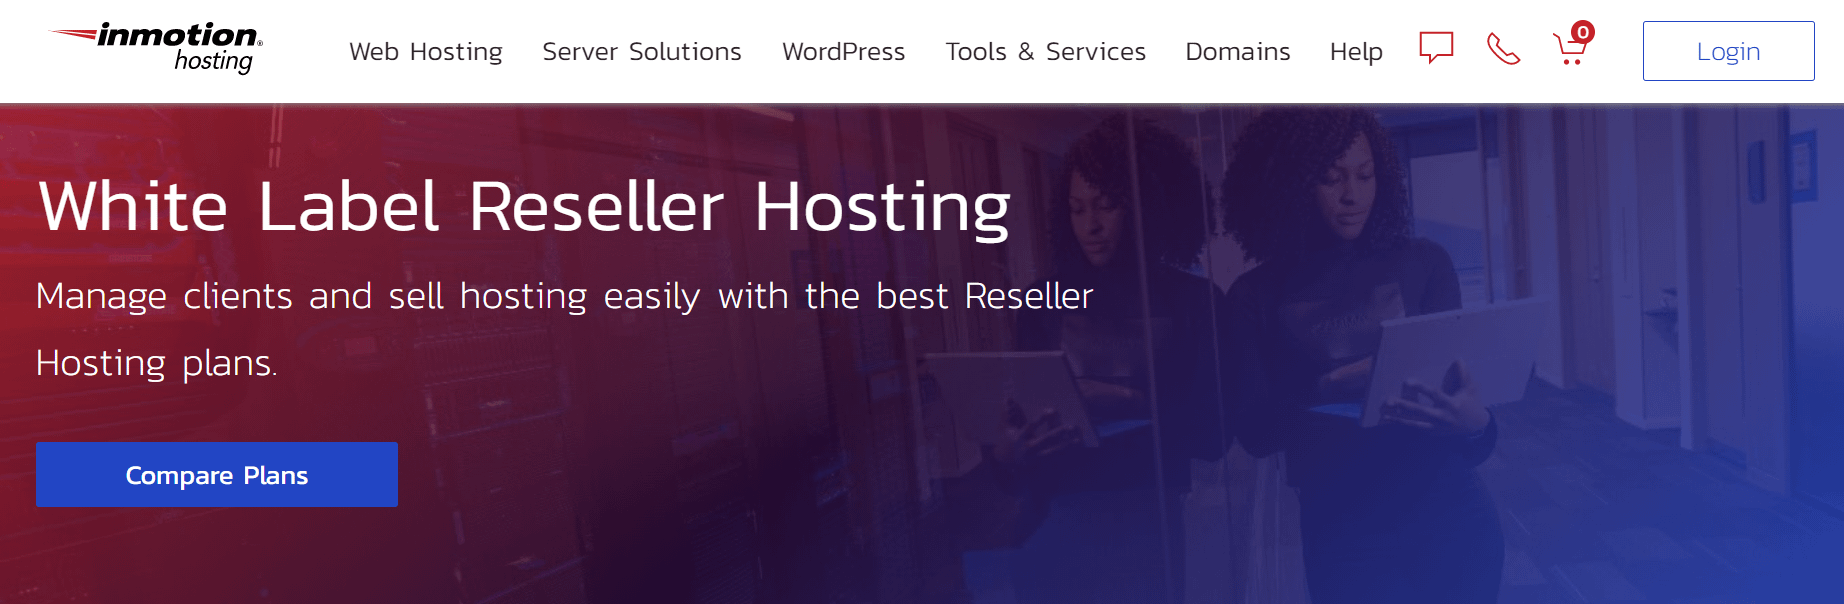 InMotion Hosting's hosting reseller page.